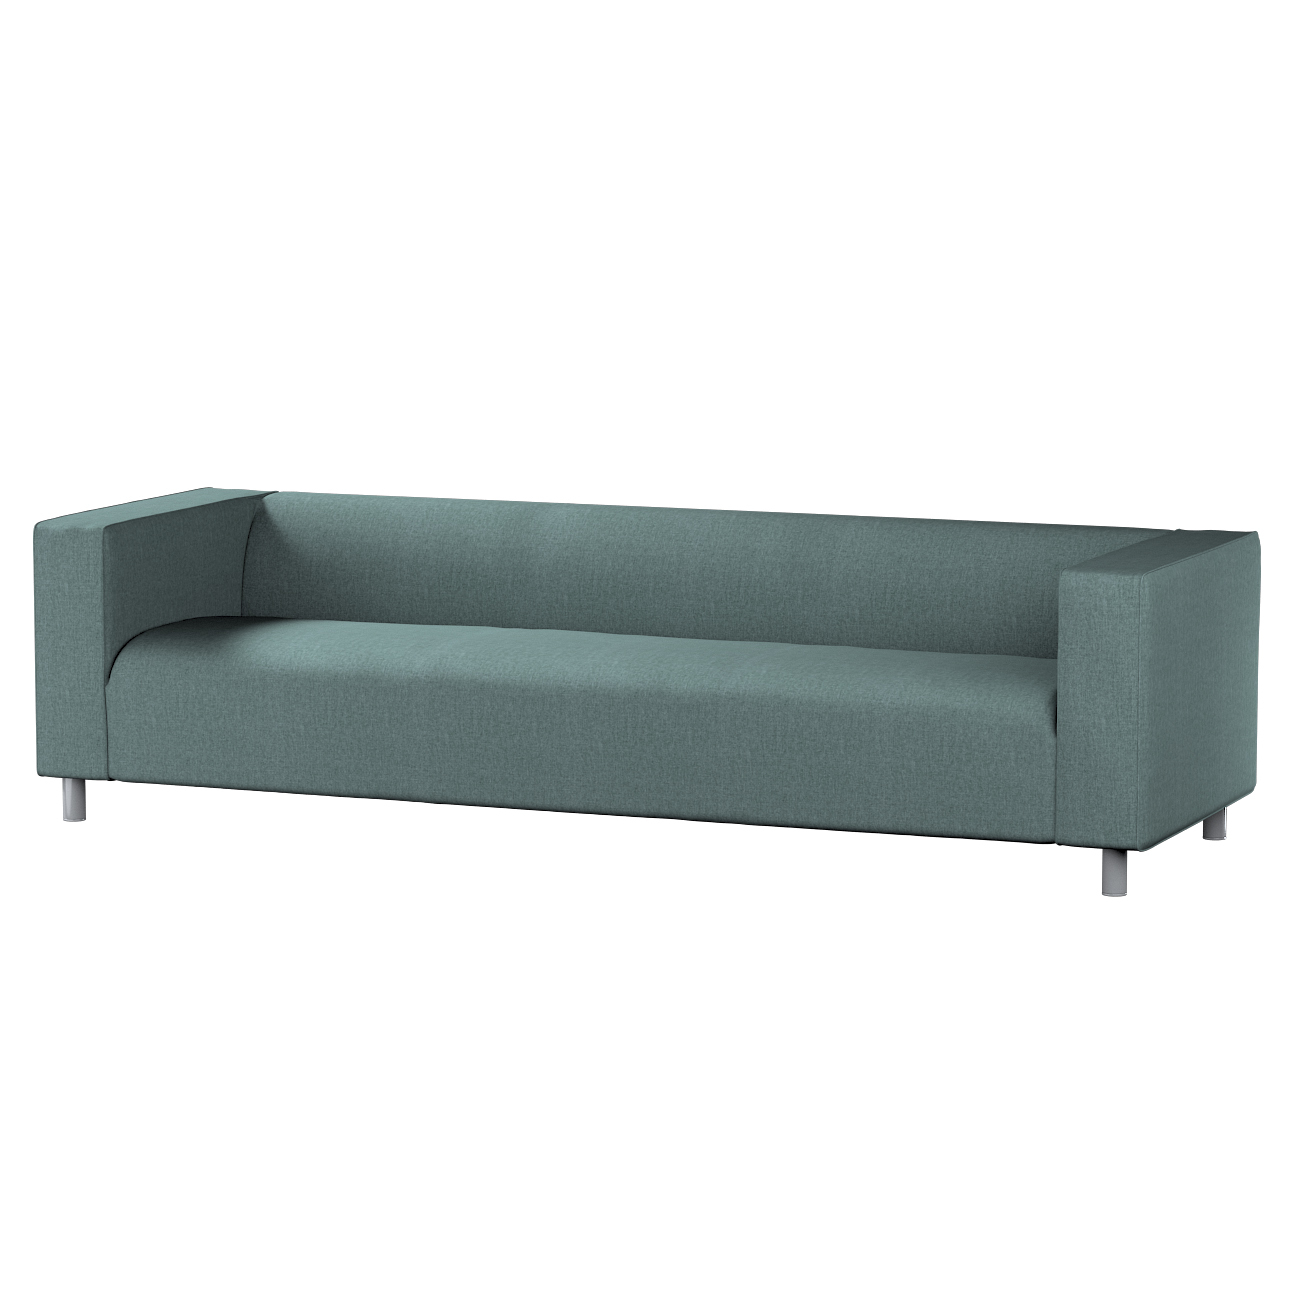 Bezug für Klippan 4-Sitzer Sofa, grau- blau, Bezug für Klippan 4-Sitzer, Ci günstig online kaufen